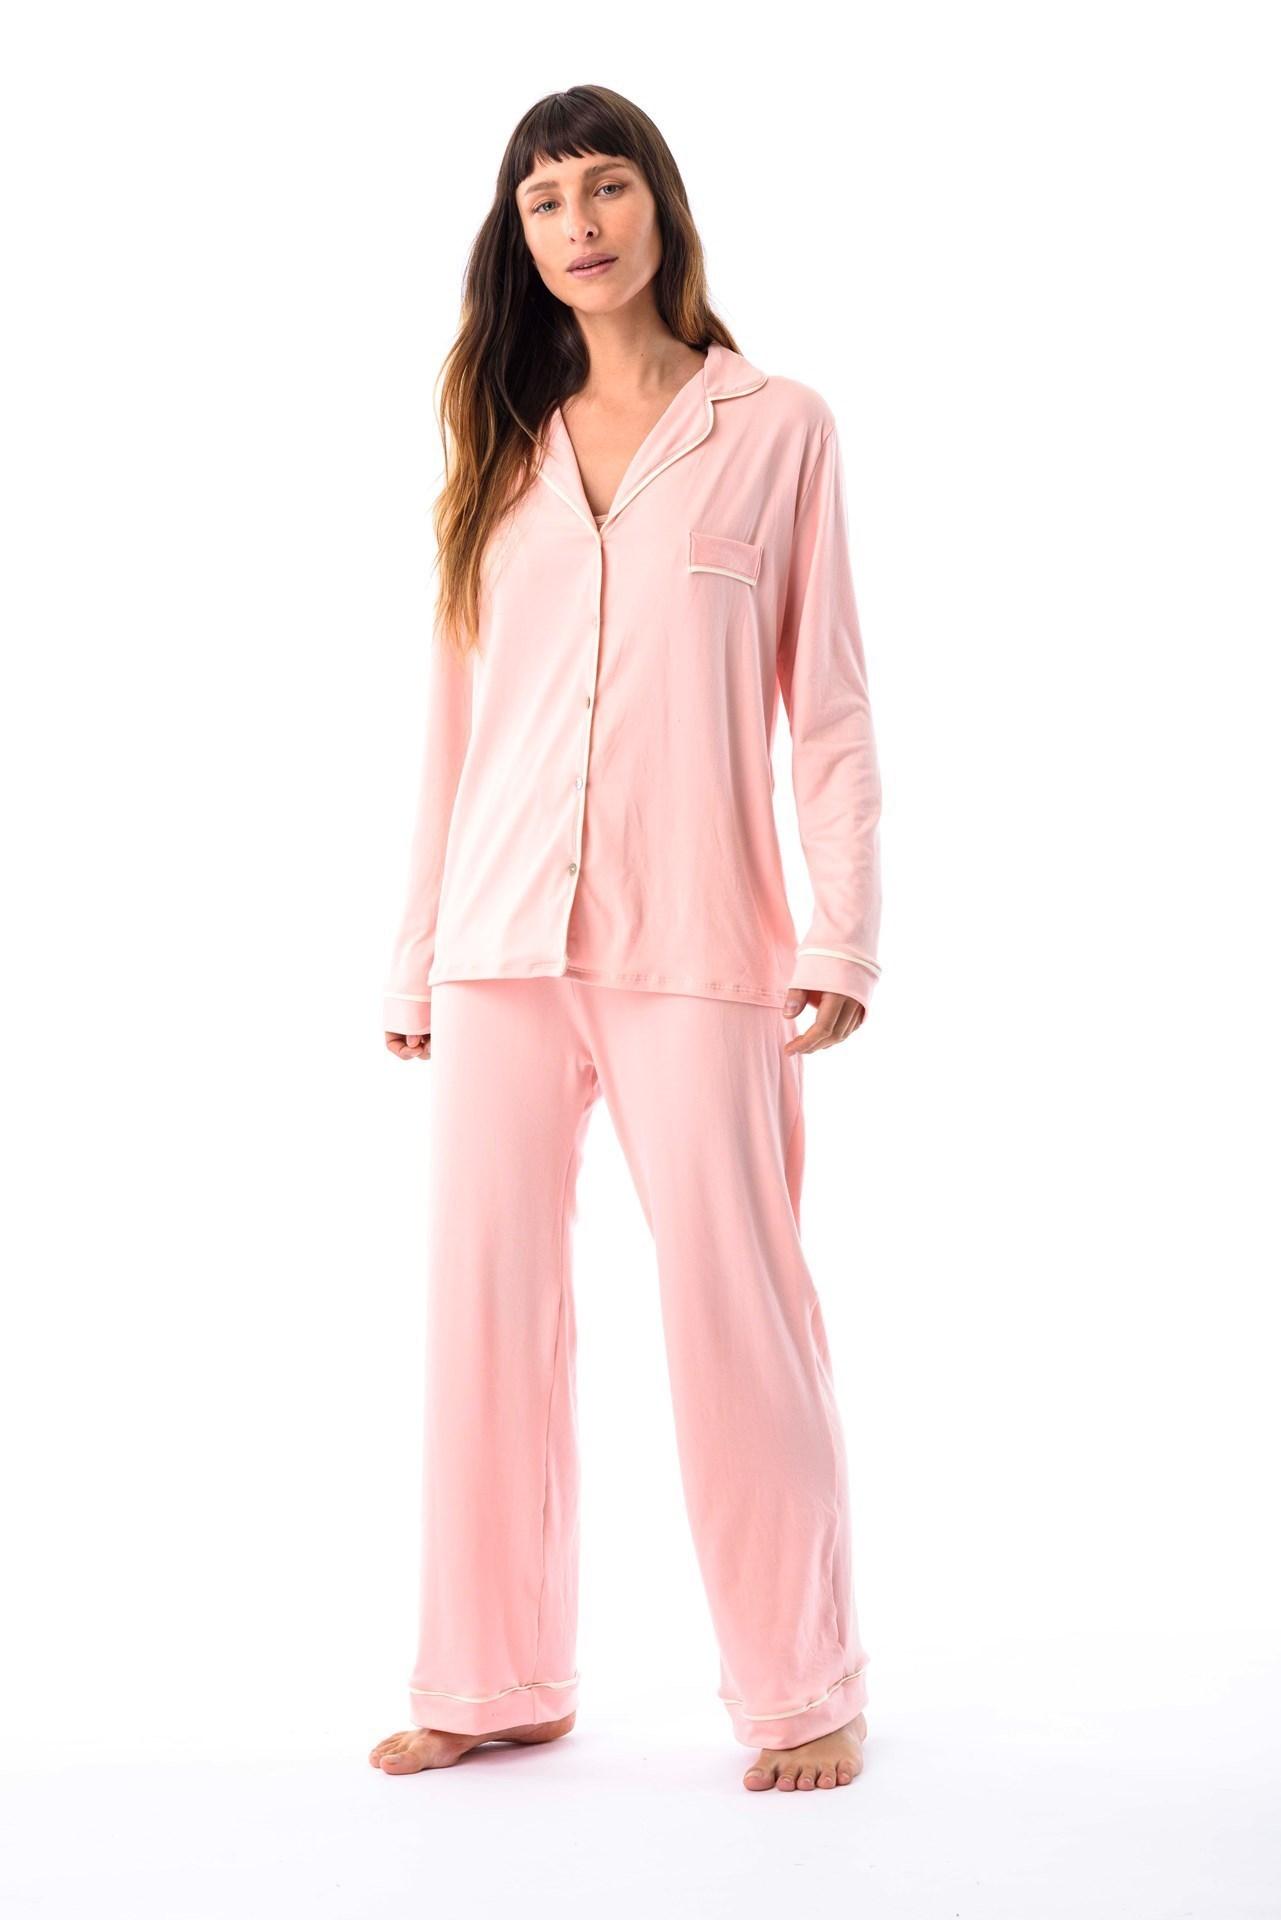 Donatella - Pijama Camisero Largo rosado m